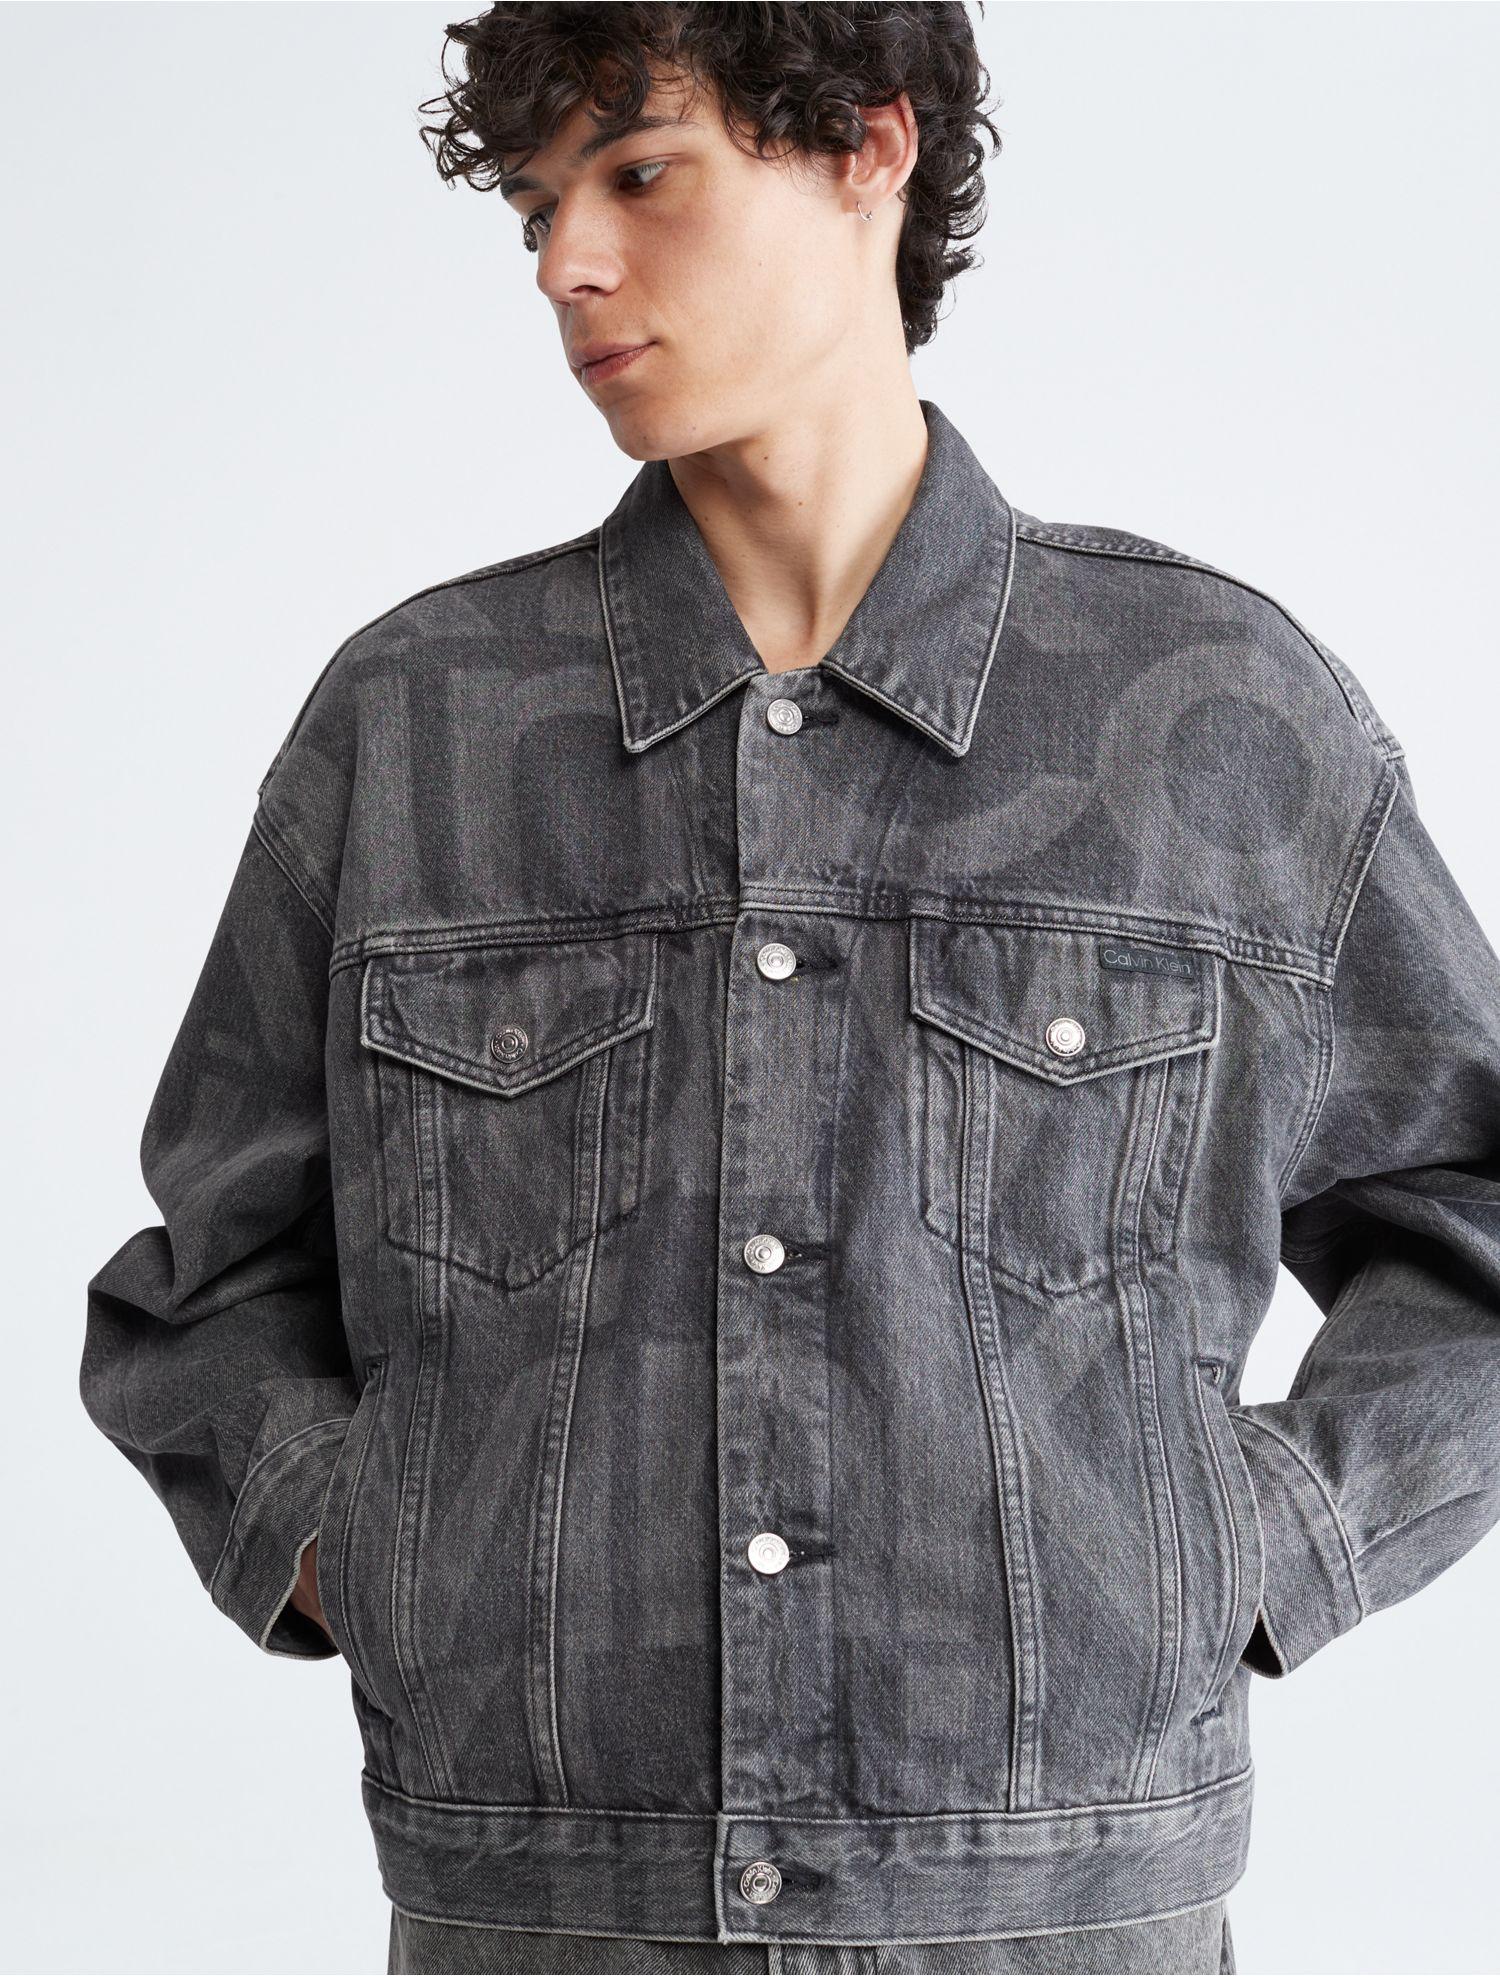 Calvin Klein Black Denim Gray Jacket for Men Archive Lyst | Trucker in